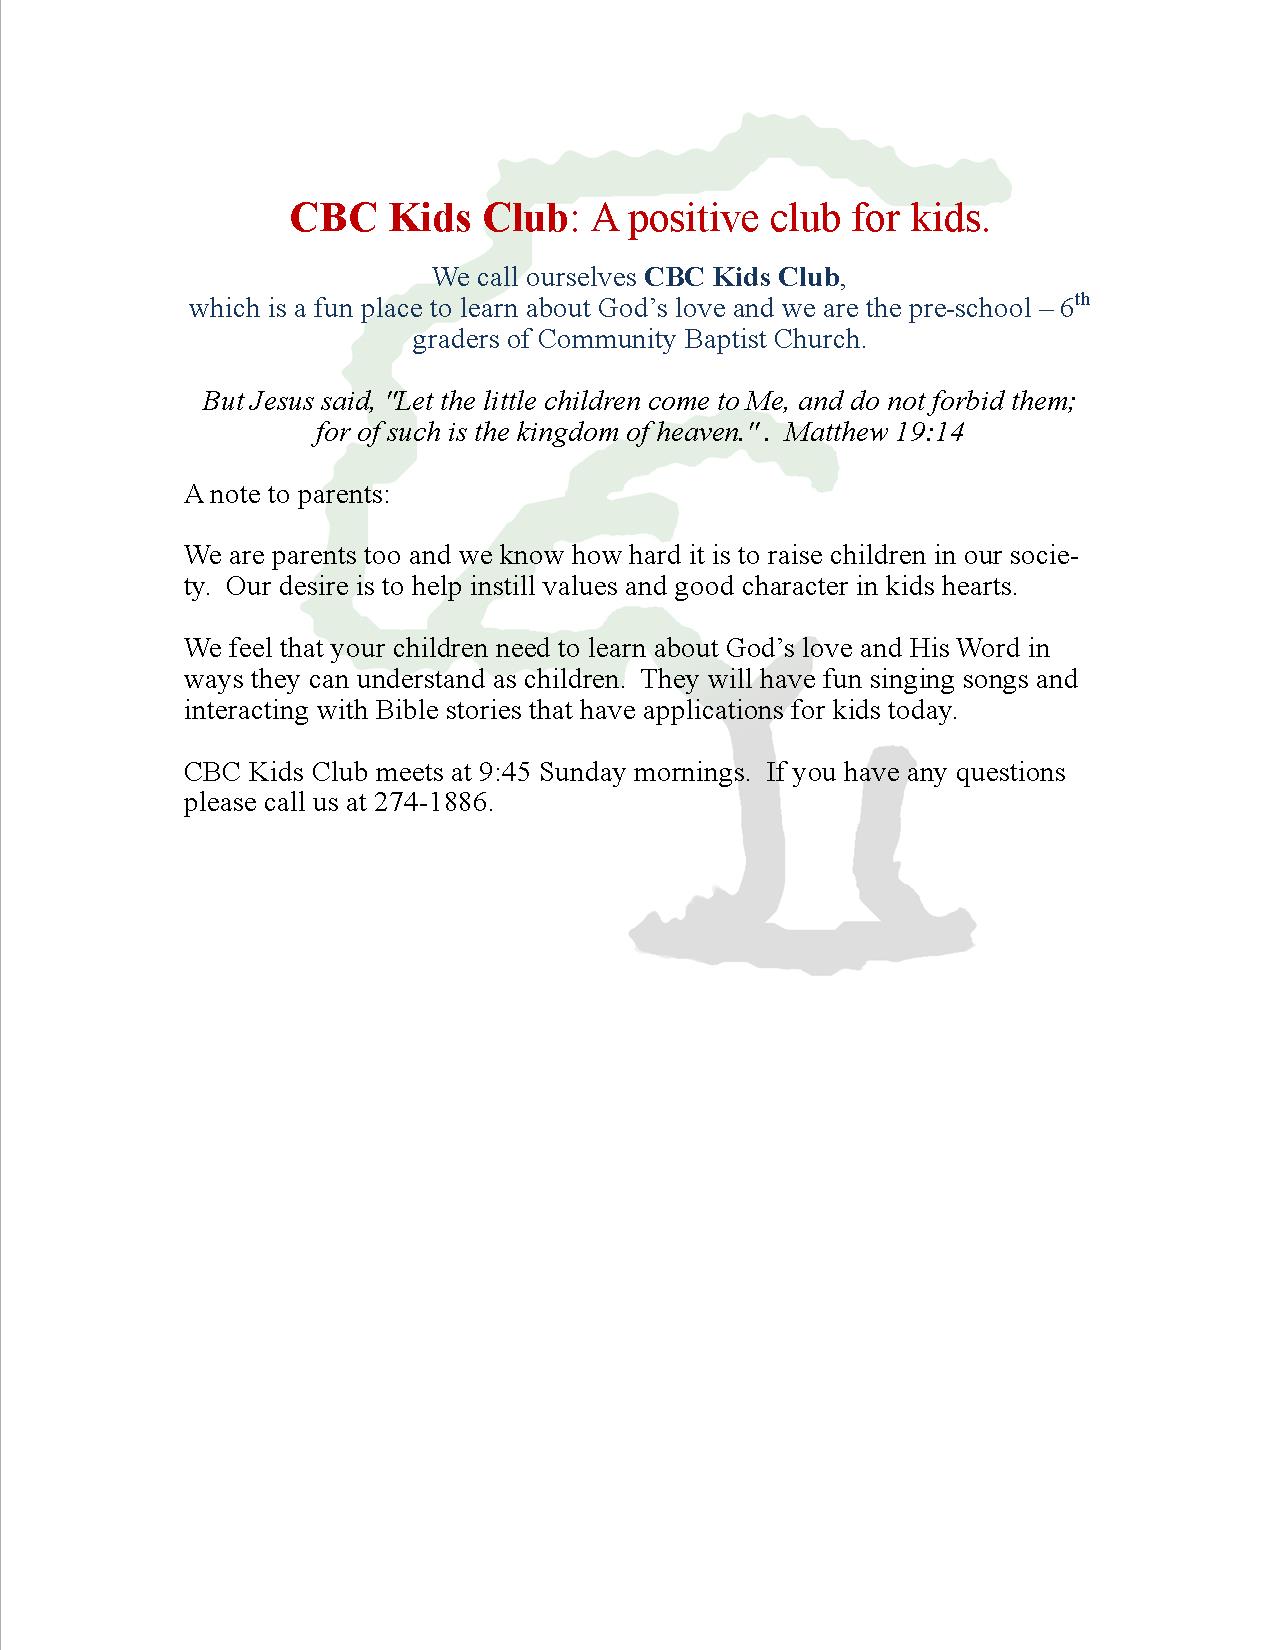 Kids Club Flyer